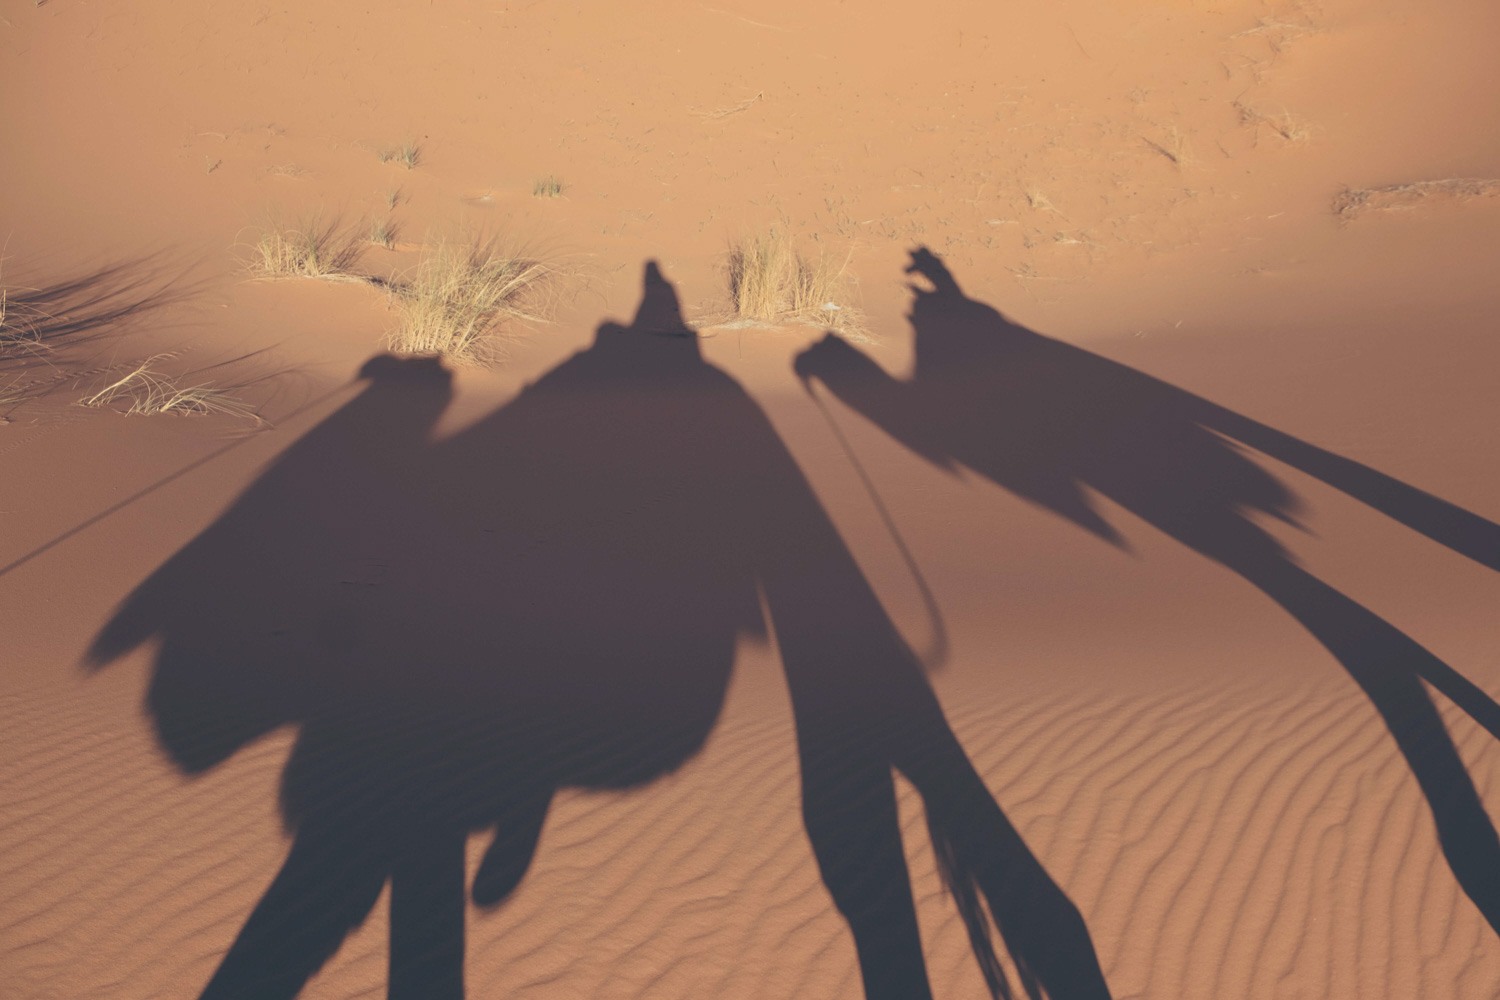 Glamping in Morocco's Sahara Desert